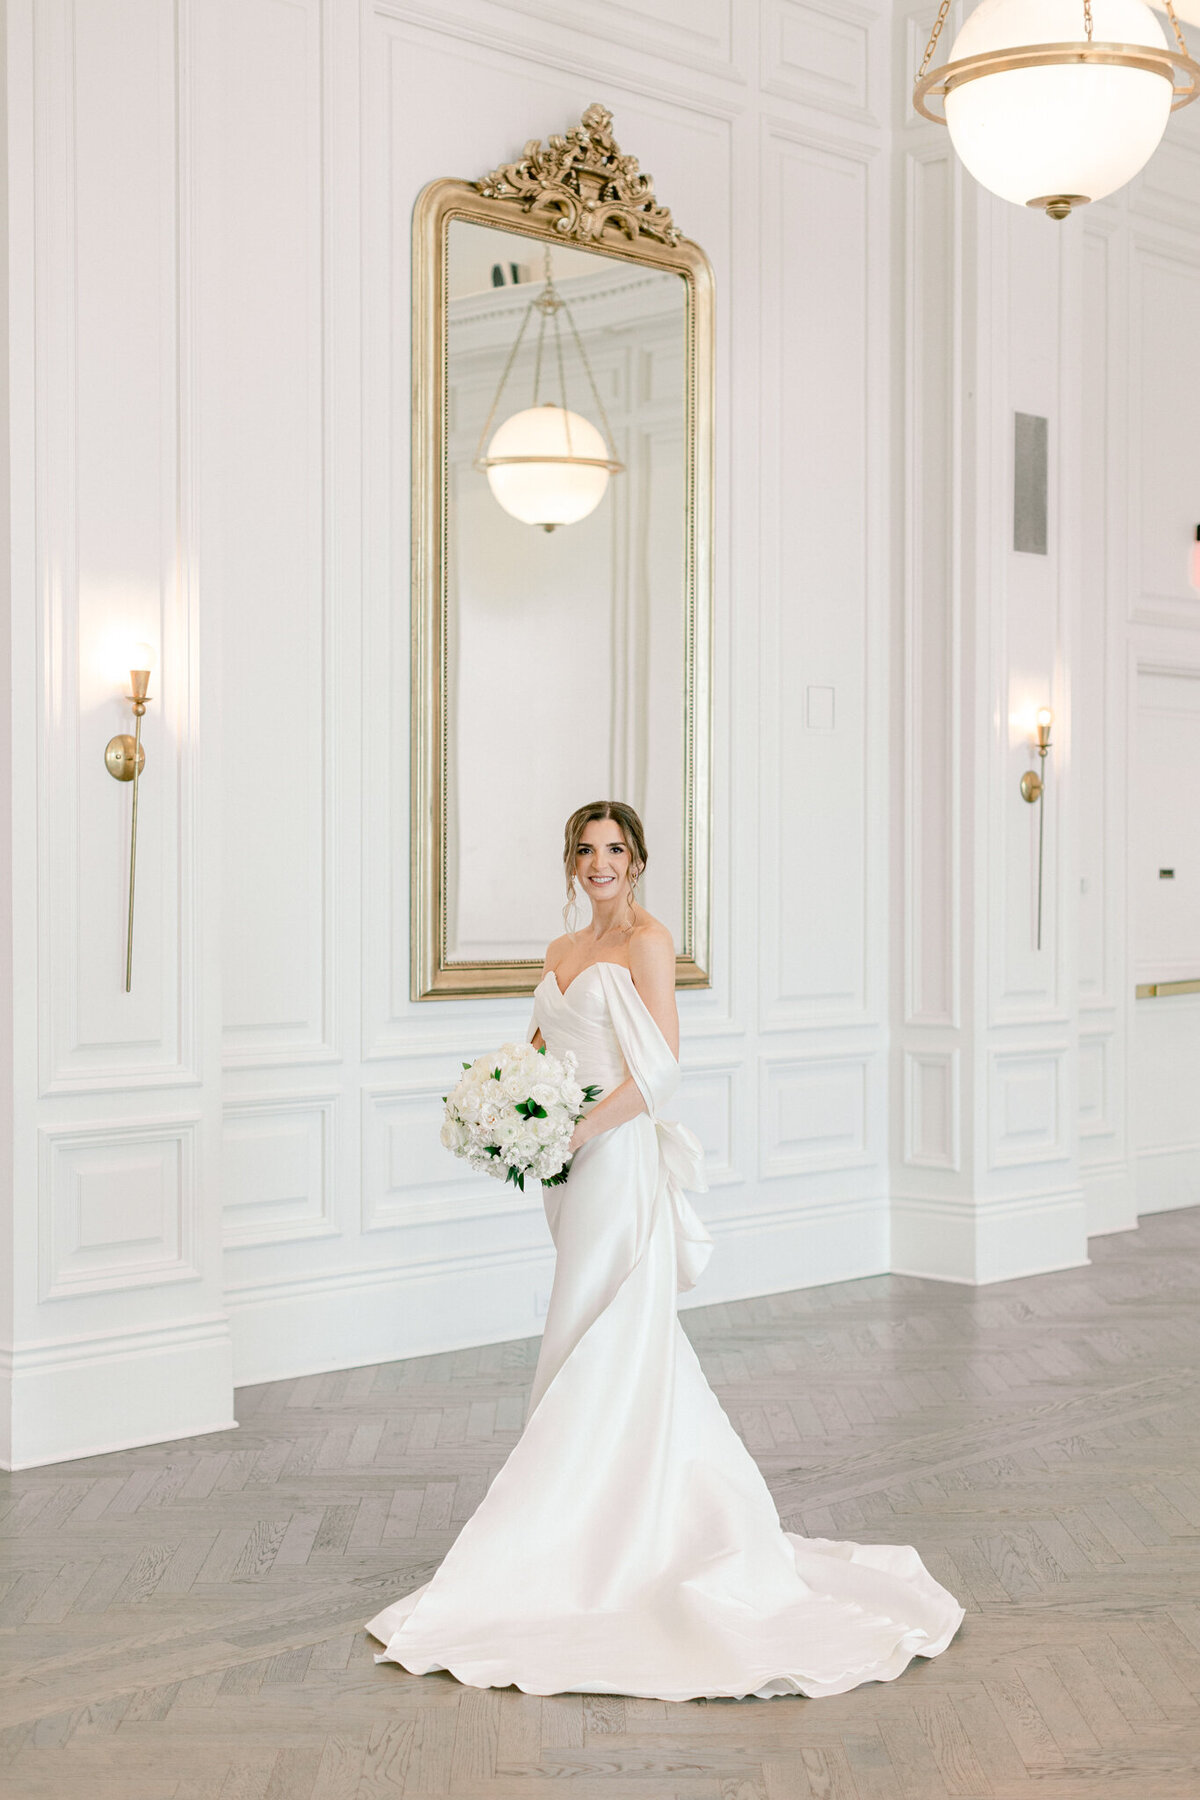 Virginia & Michael's Wedding at the Adolphus Hotel | Dallas Wedding Photographer | Sami Kathryn Photography-73